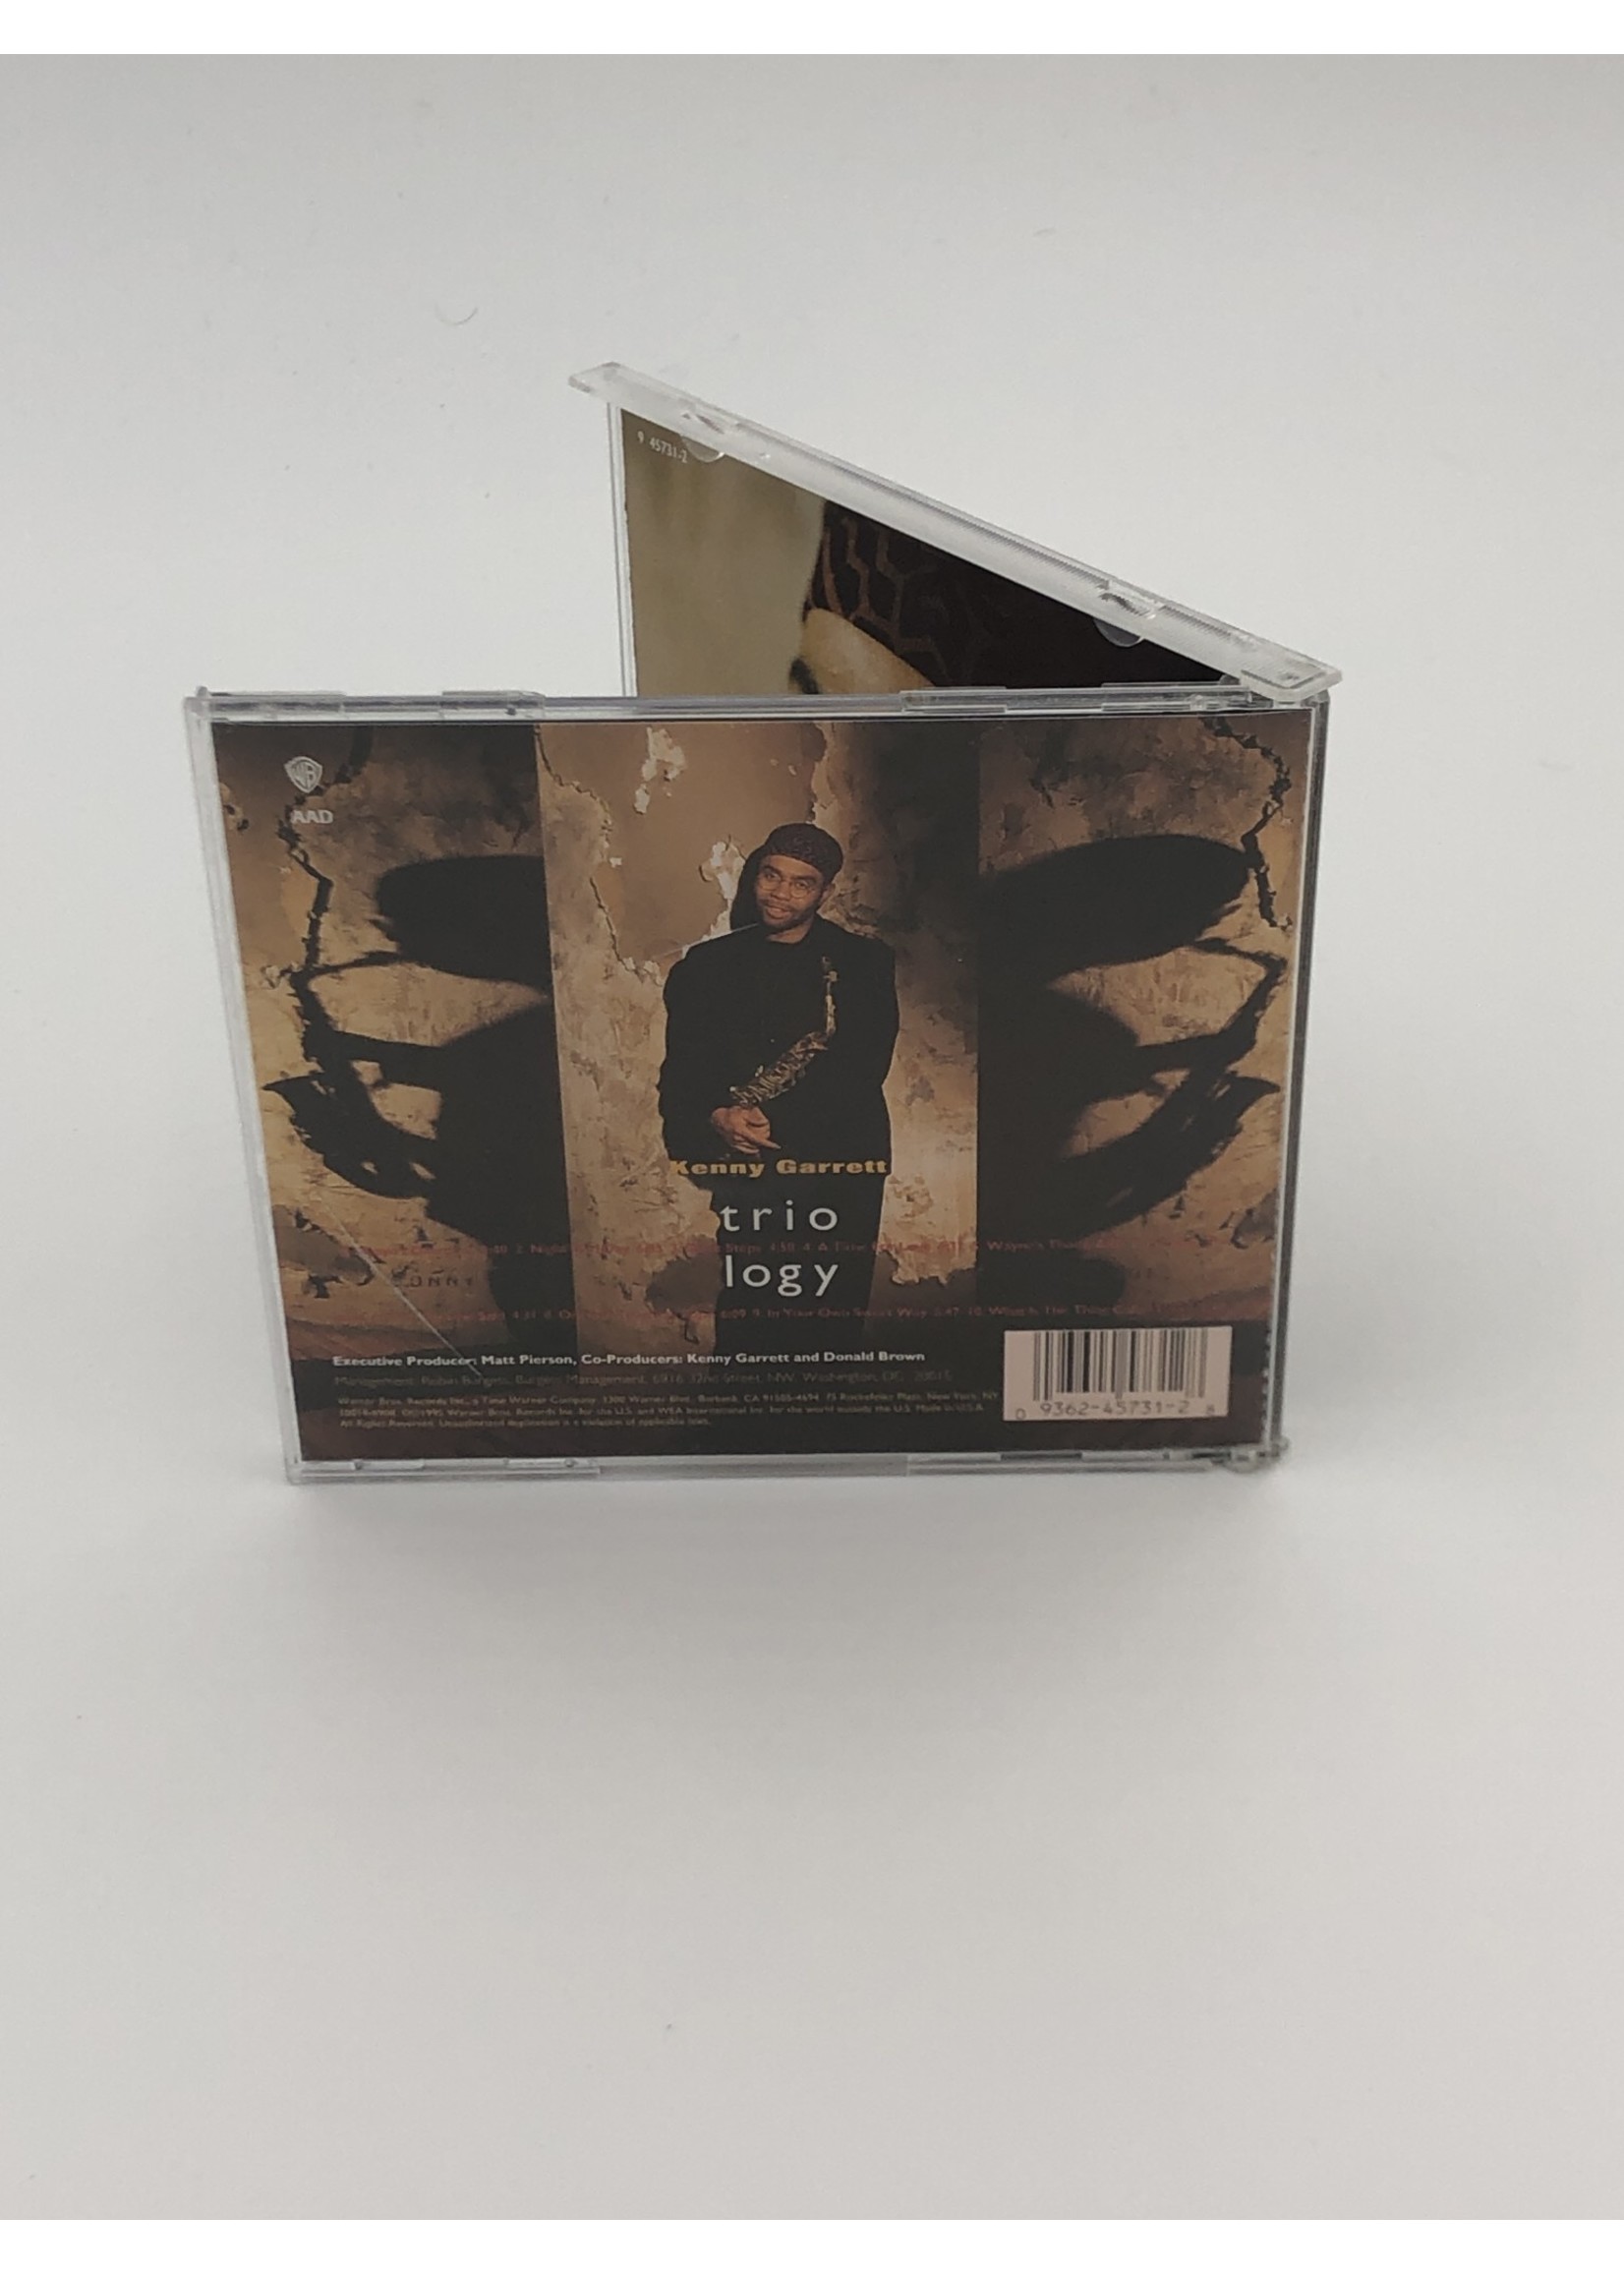 CD Kenny Garrett: Trilogy CD